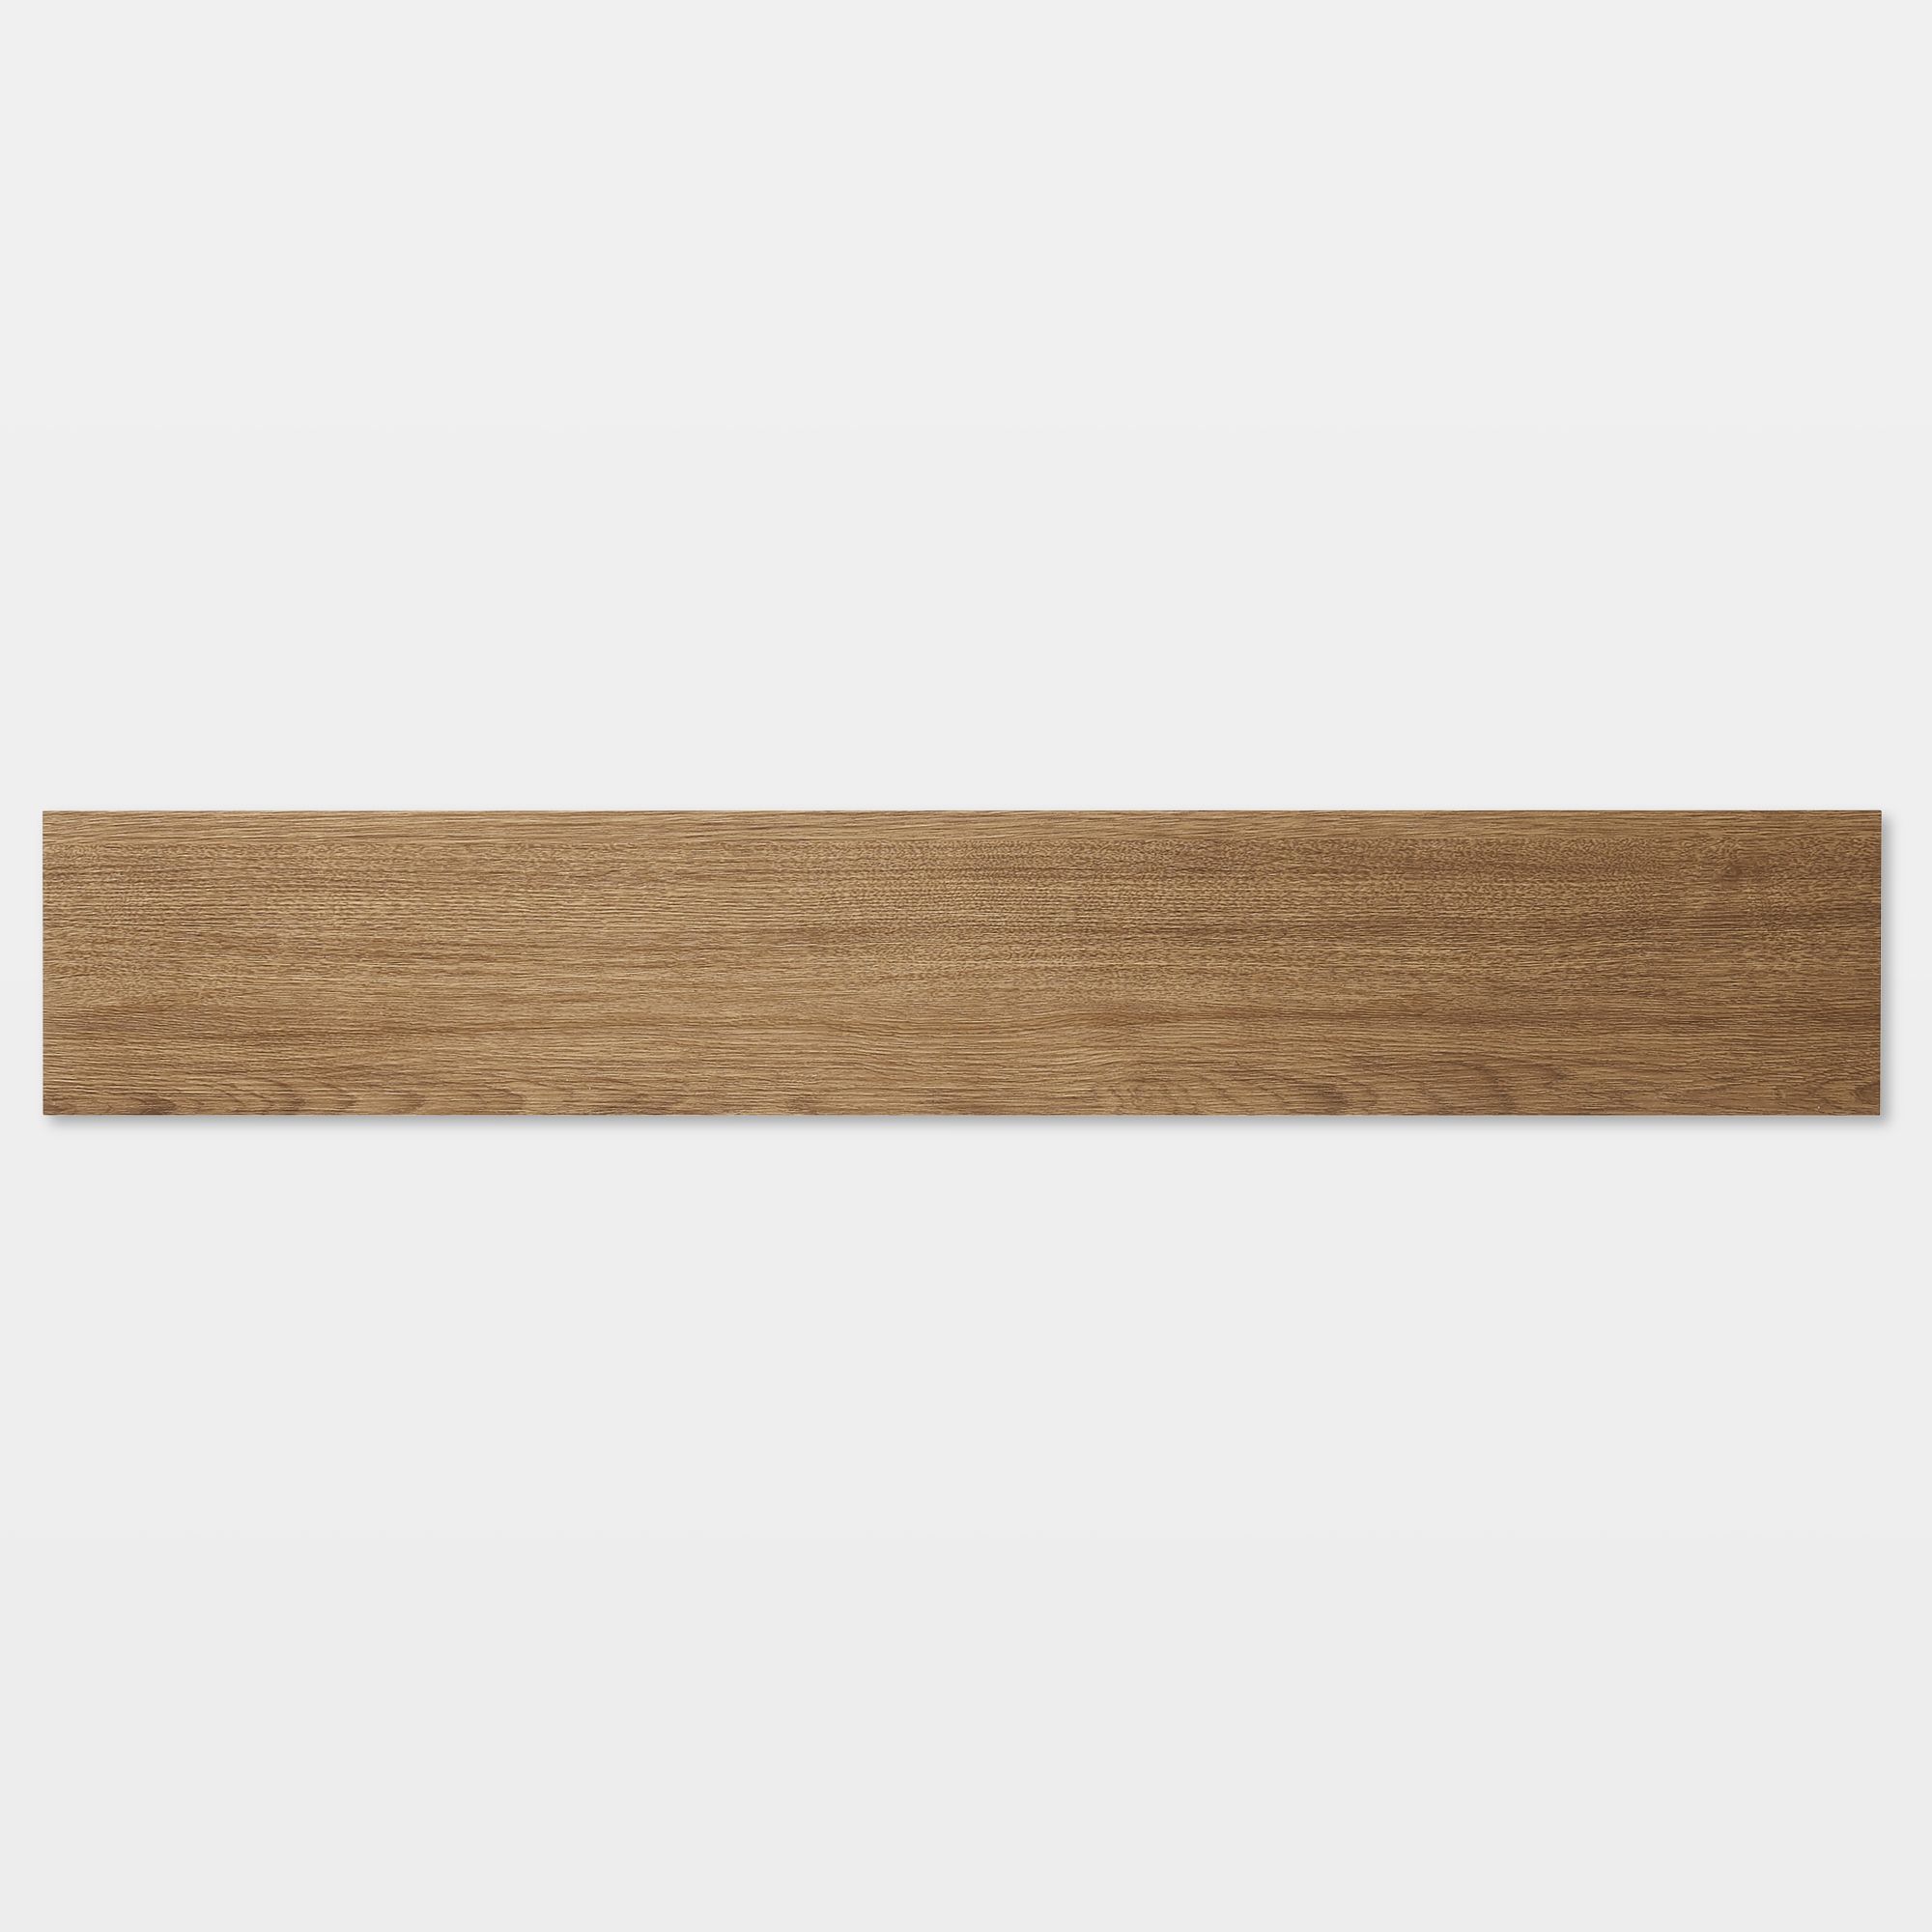 GoodHome Poprock Natural honey Wood planks Wood effect Self-adhesive Vinyl plank, Pack of 7